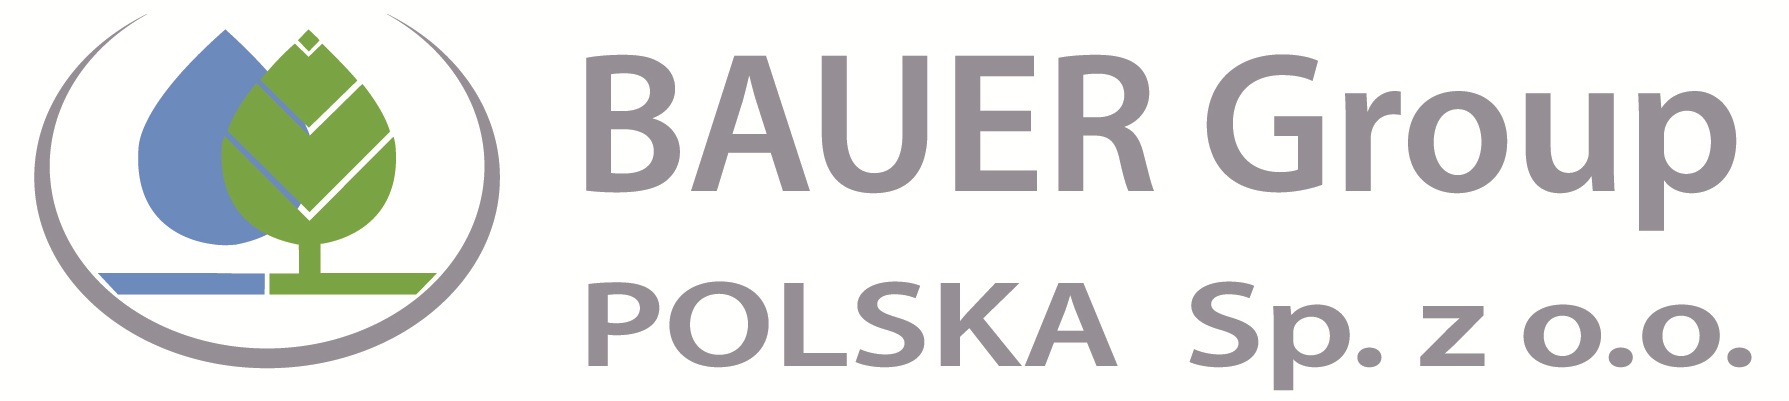 BAUER Group Polska Sp. z o.o.